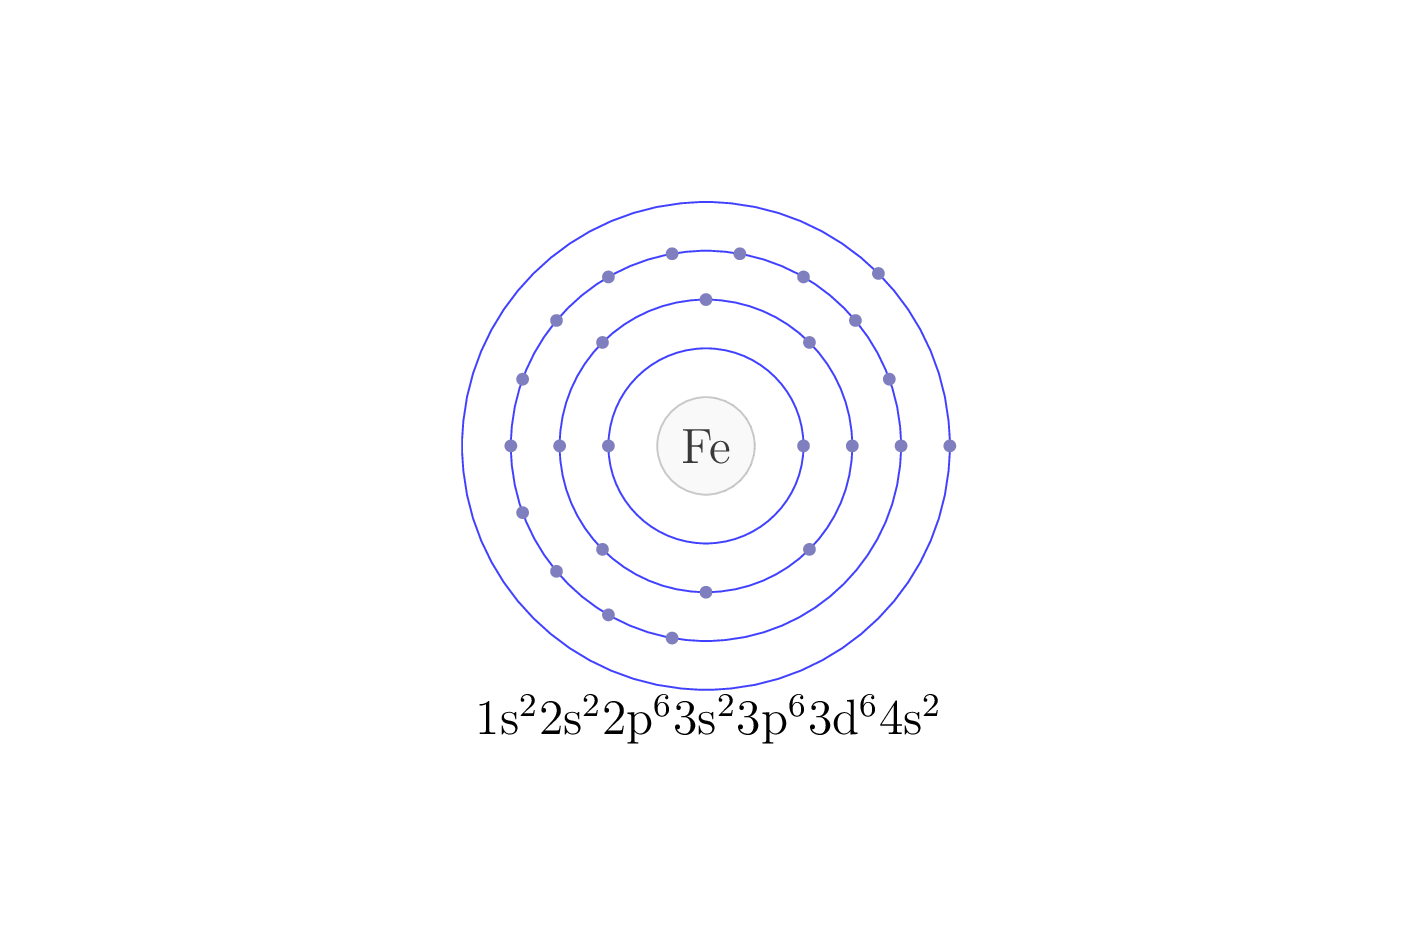 electron configuration of element Fe